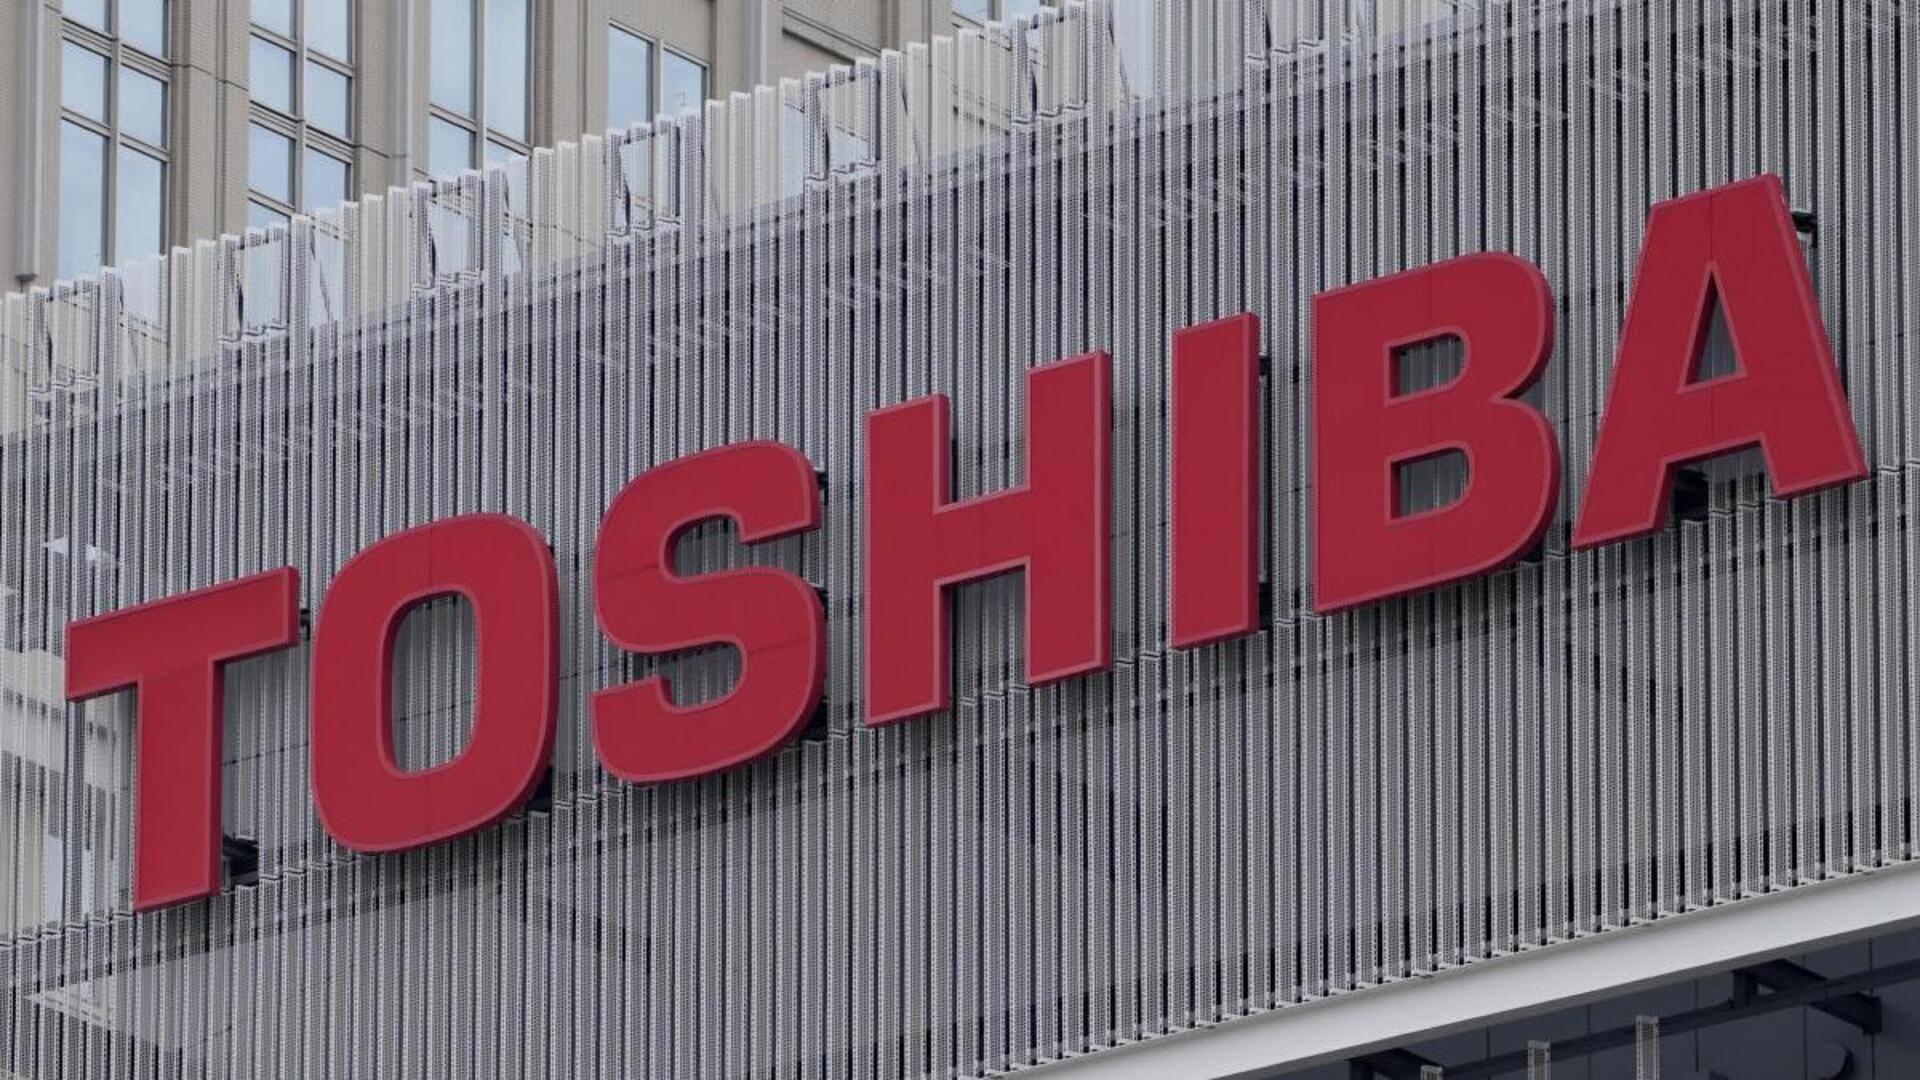 Toshiba recalls 17mn laptop adapters due to fire hazard